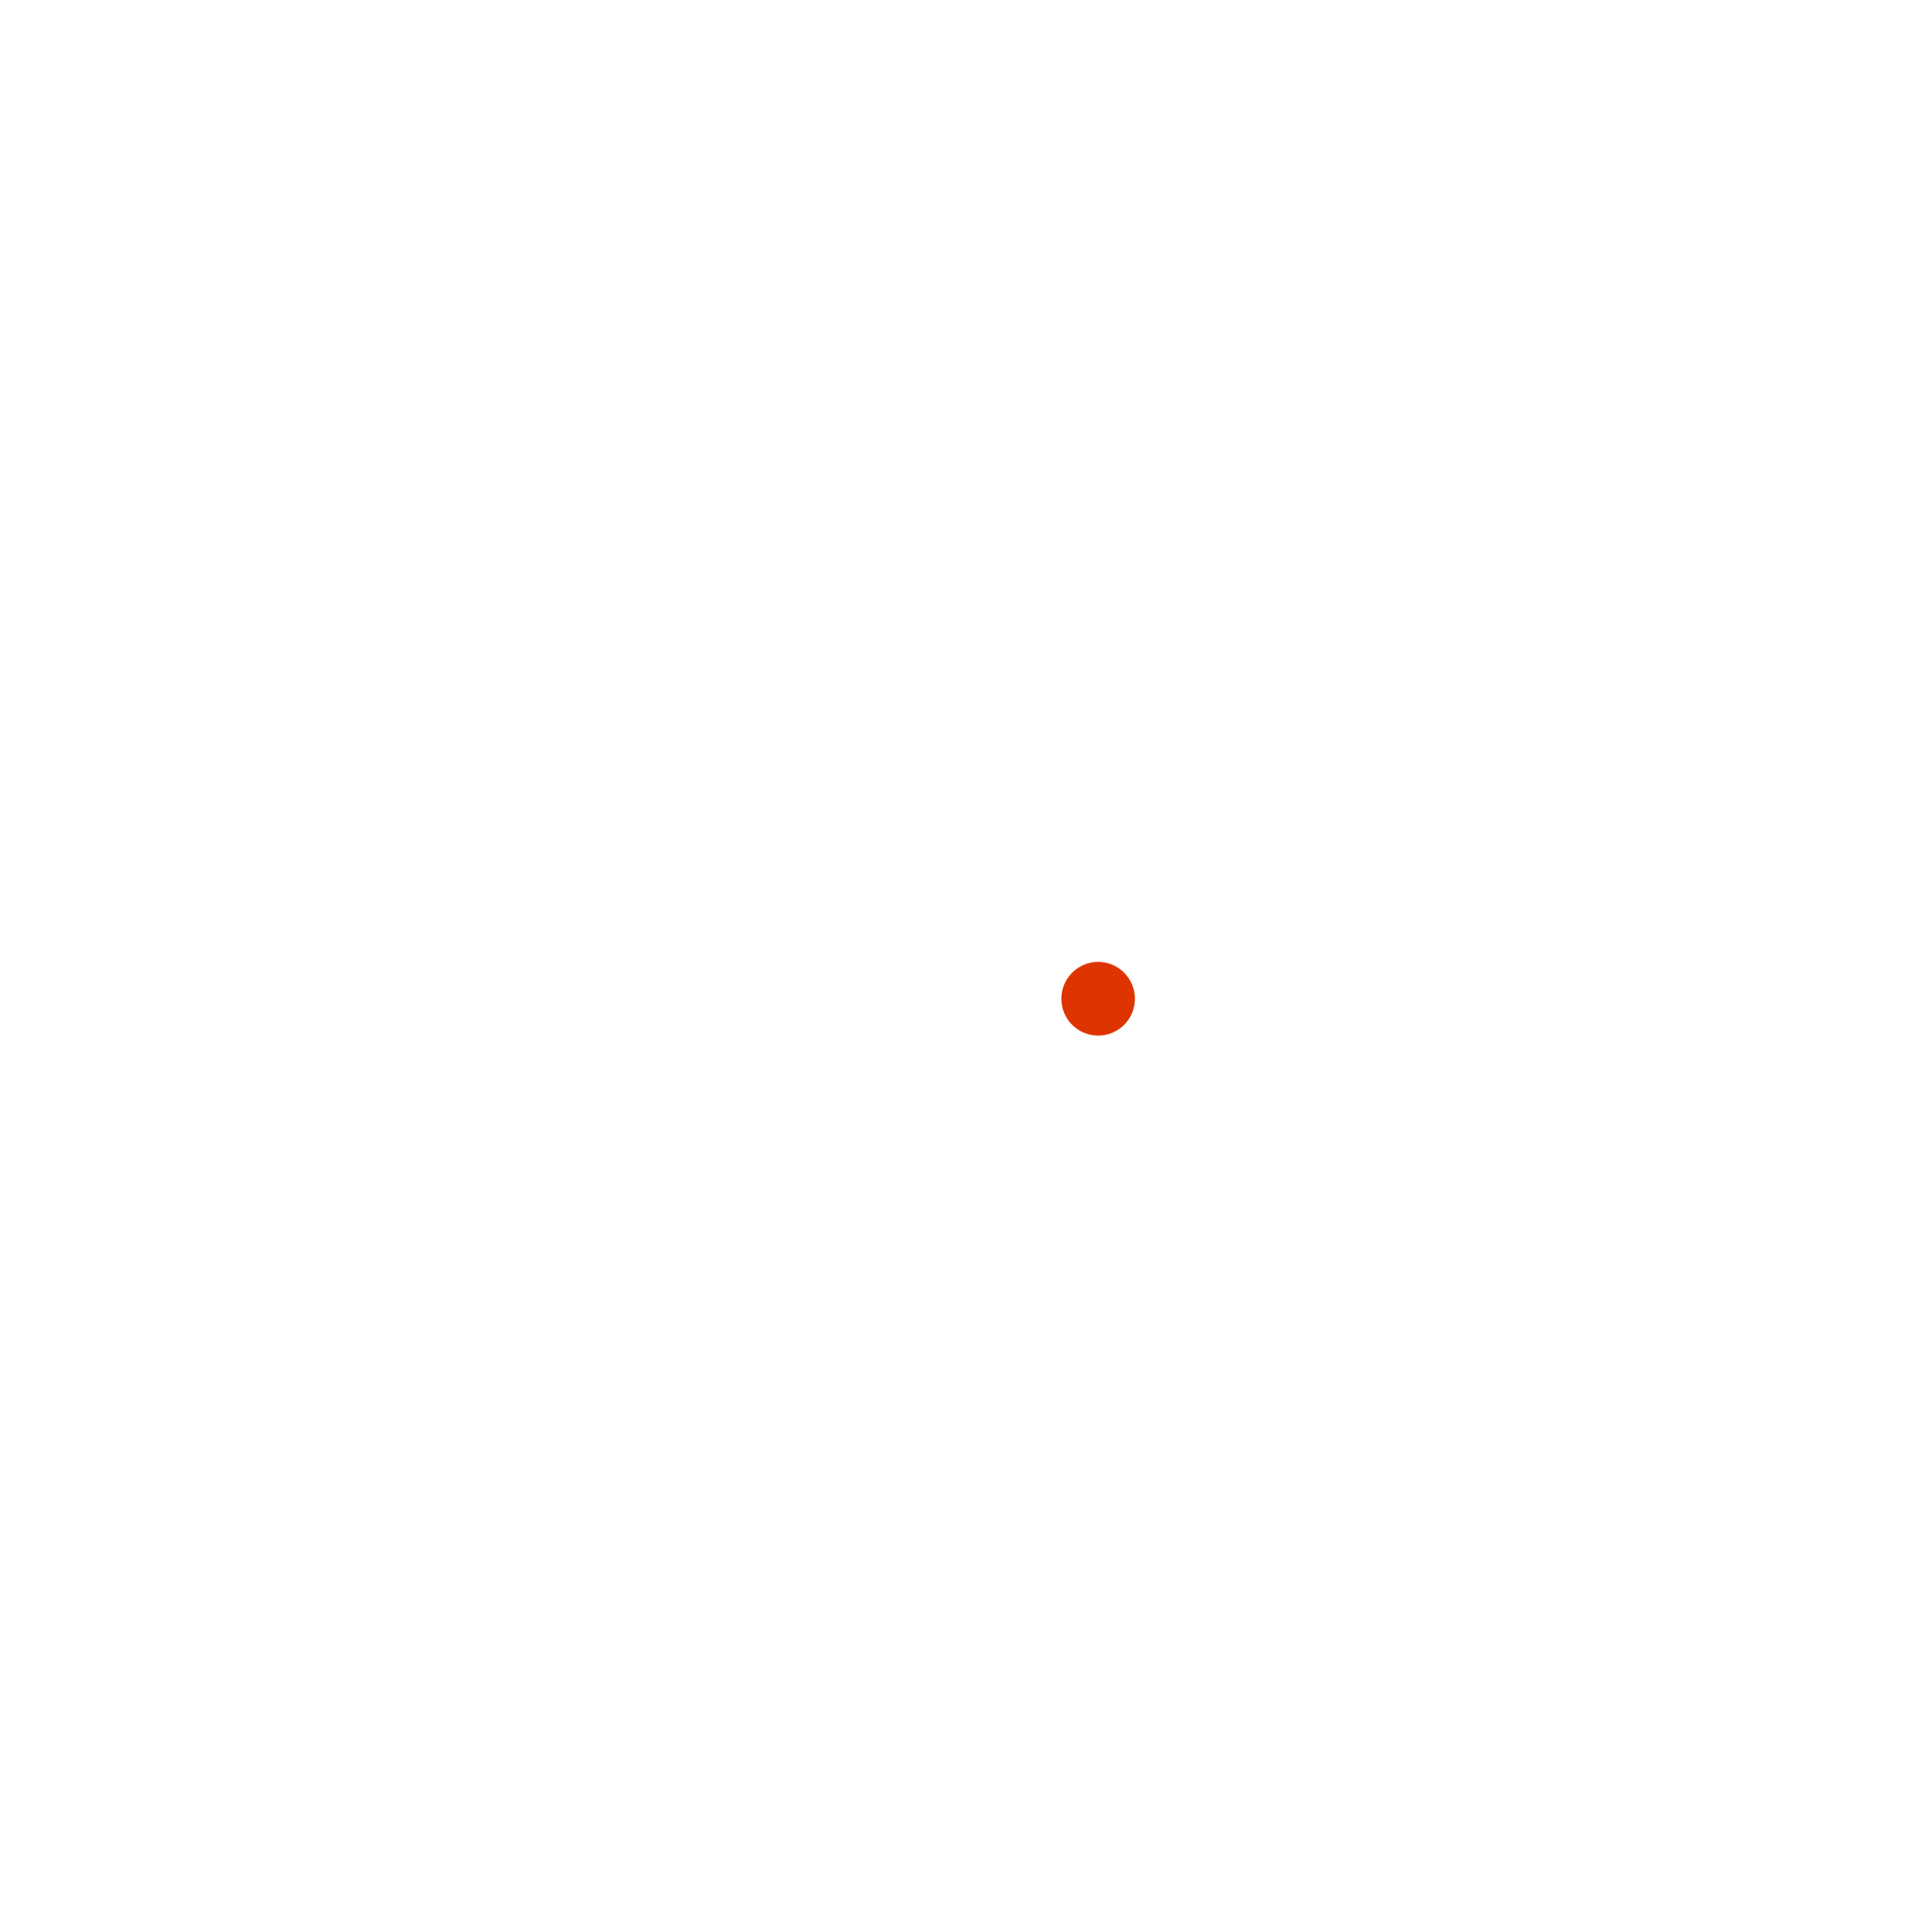 Earth.com White Tagline Logo  Transparent Image